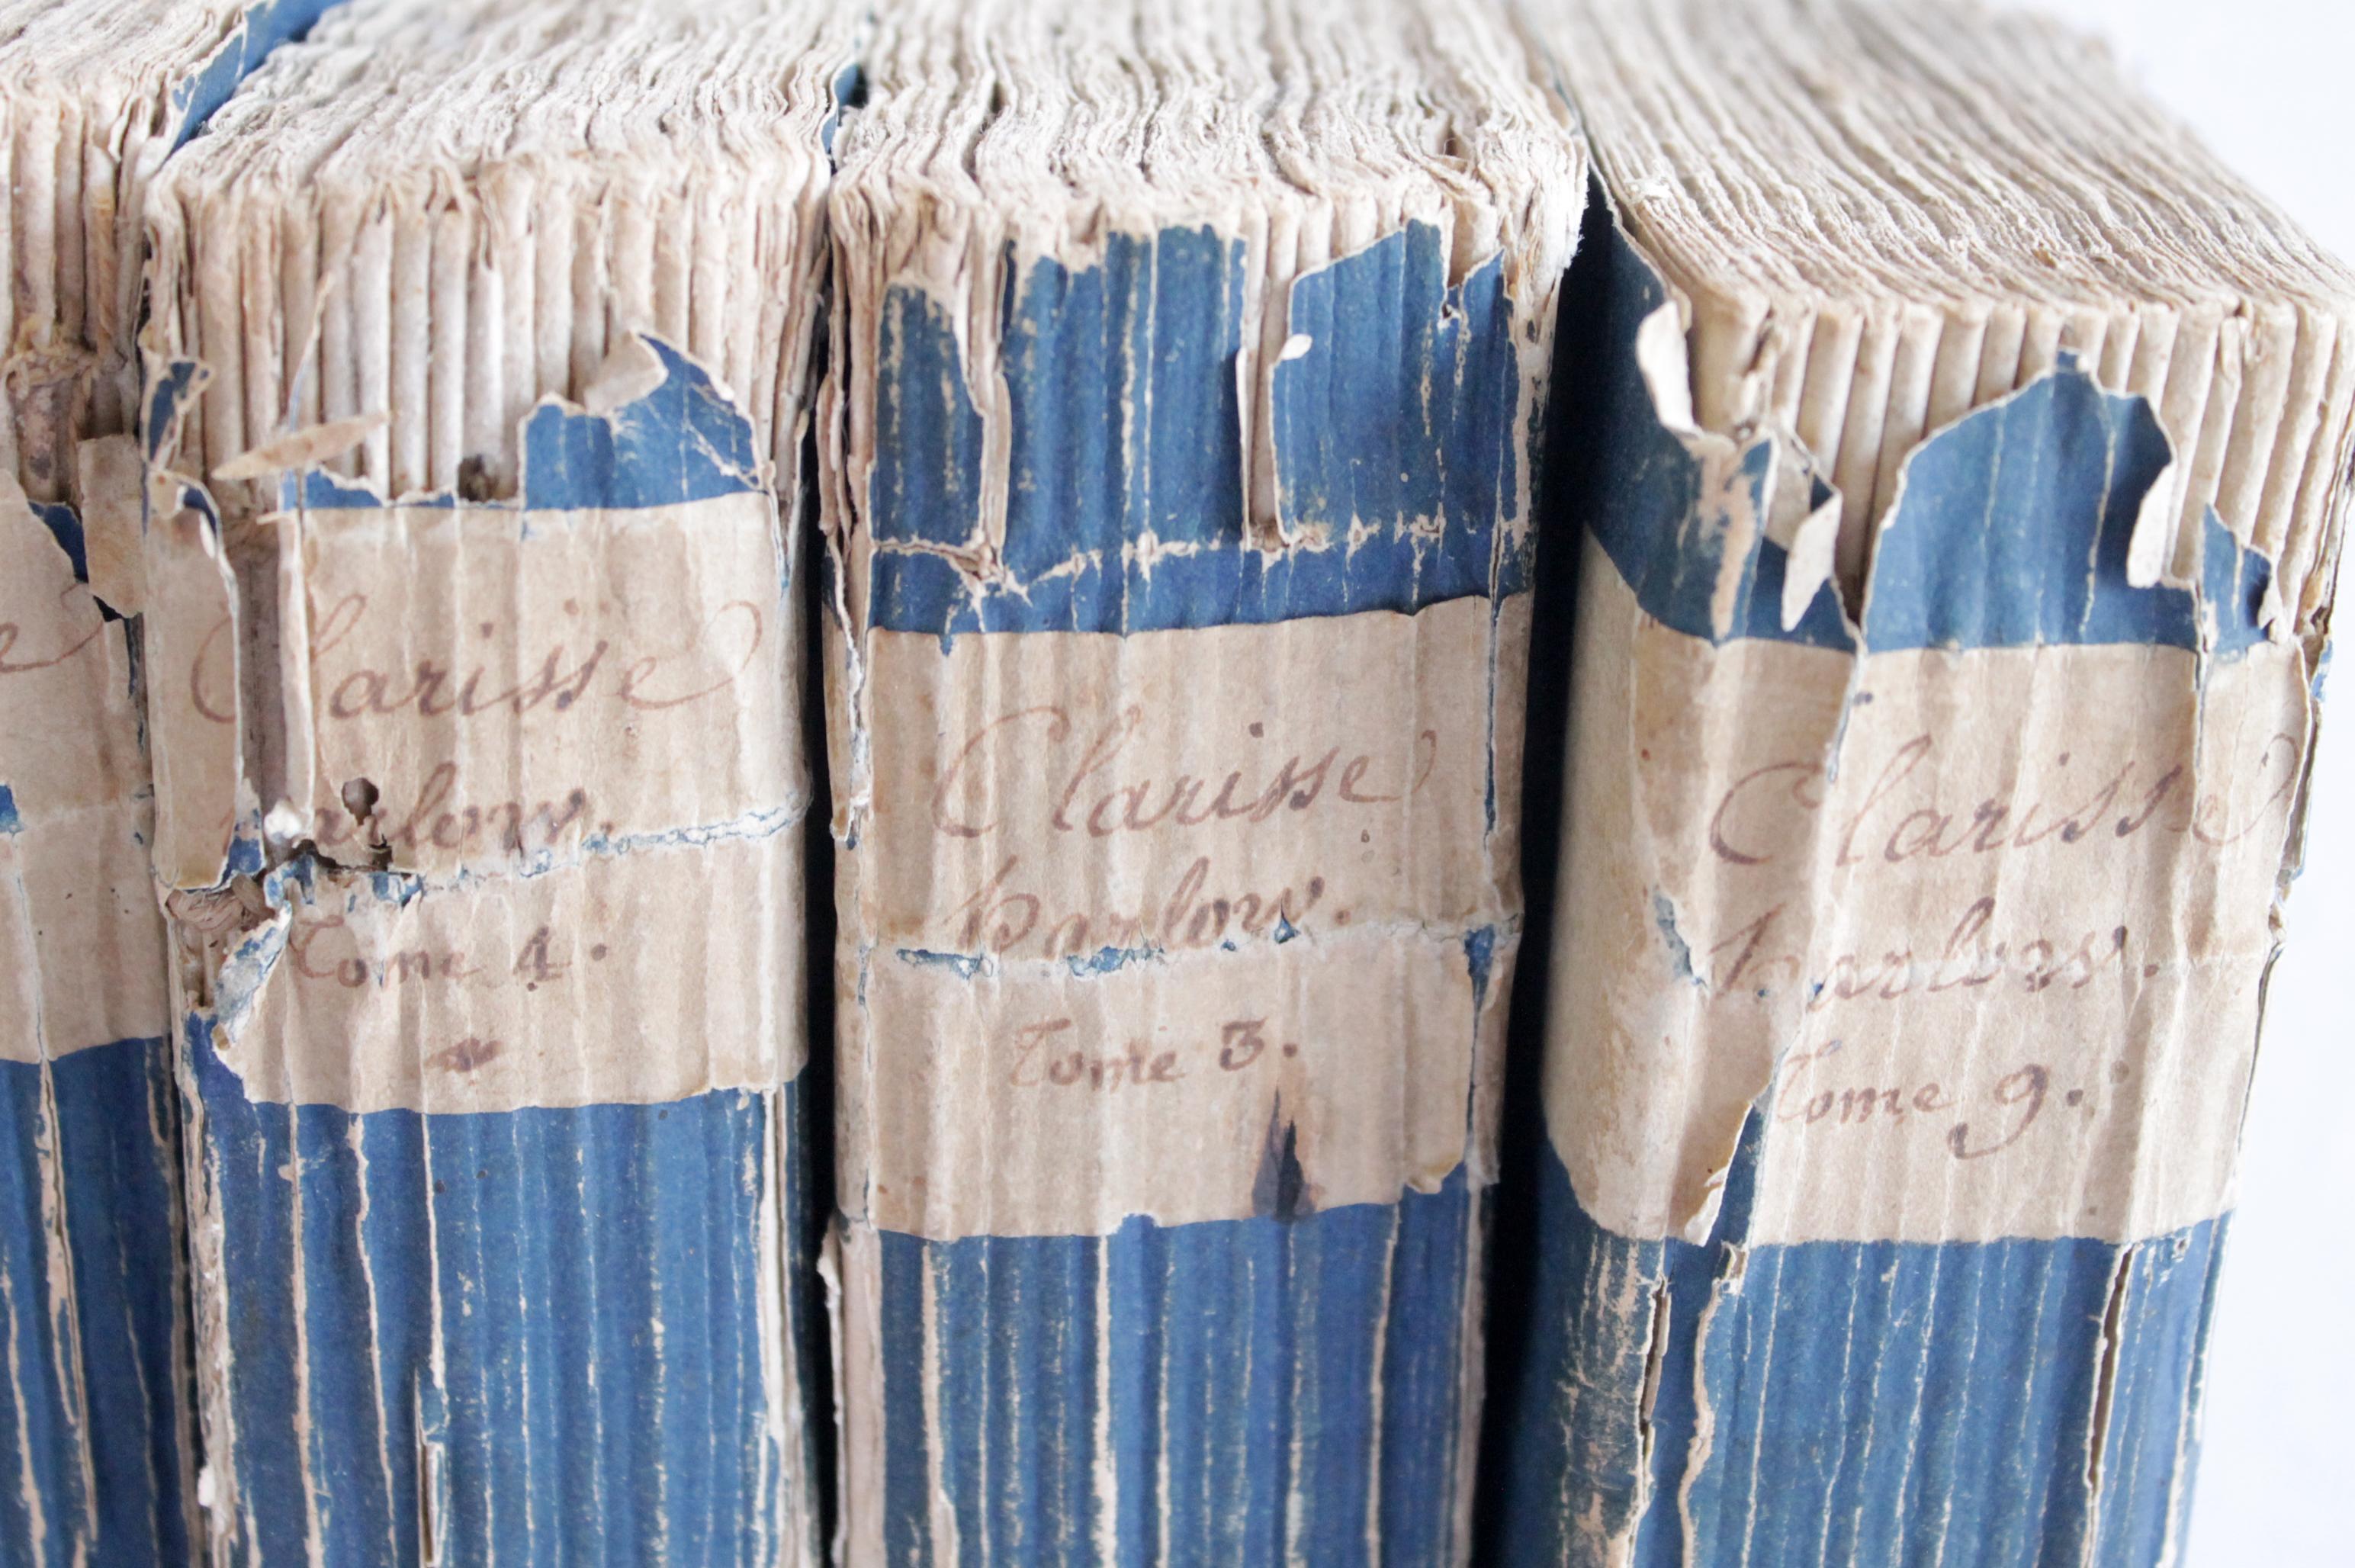 European Antique French Clarisse Harlowe Paper Back Volumes by Samuel Richardson